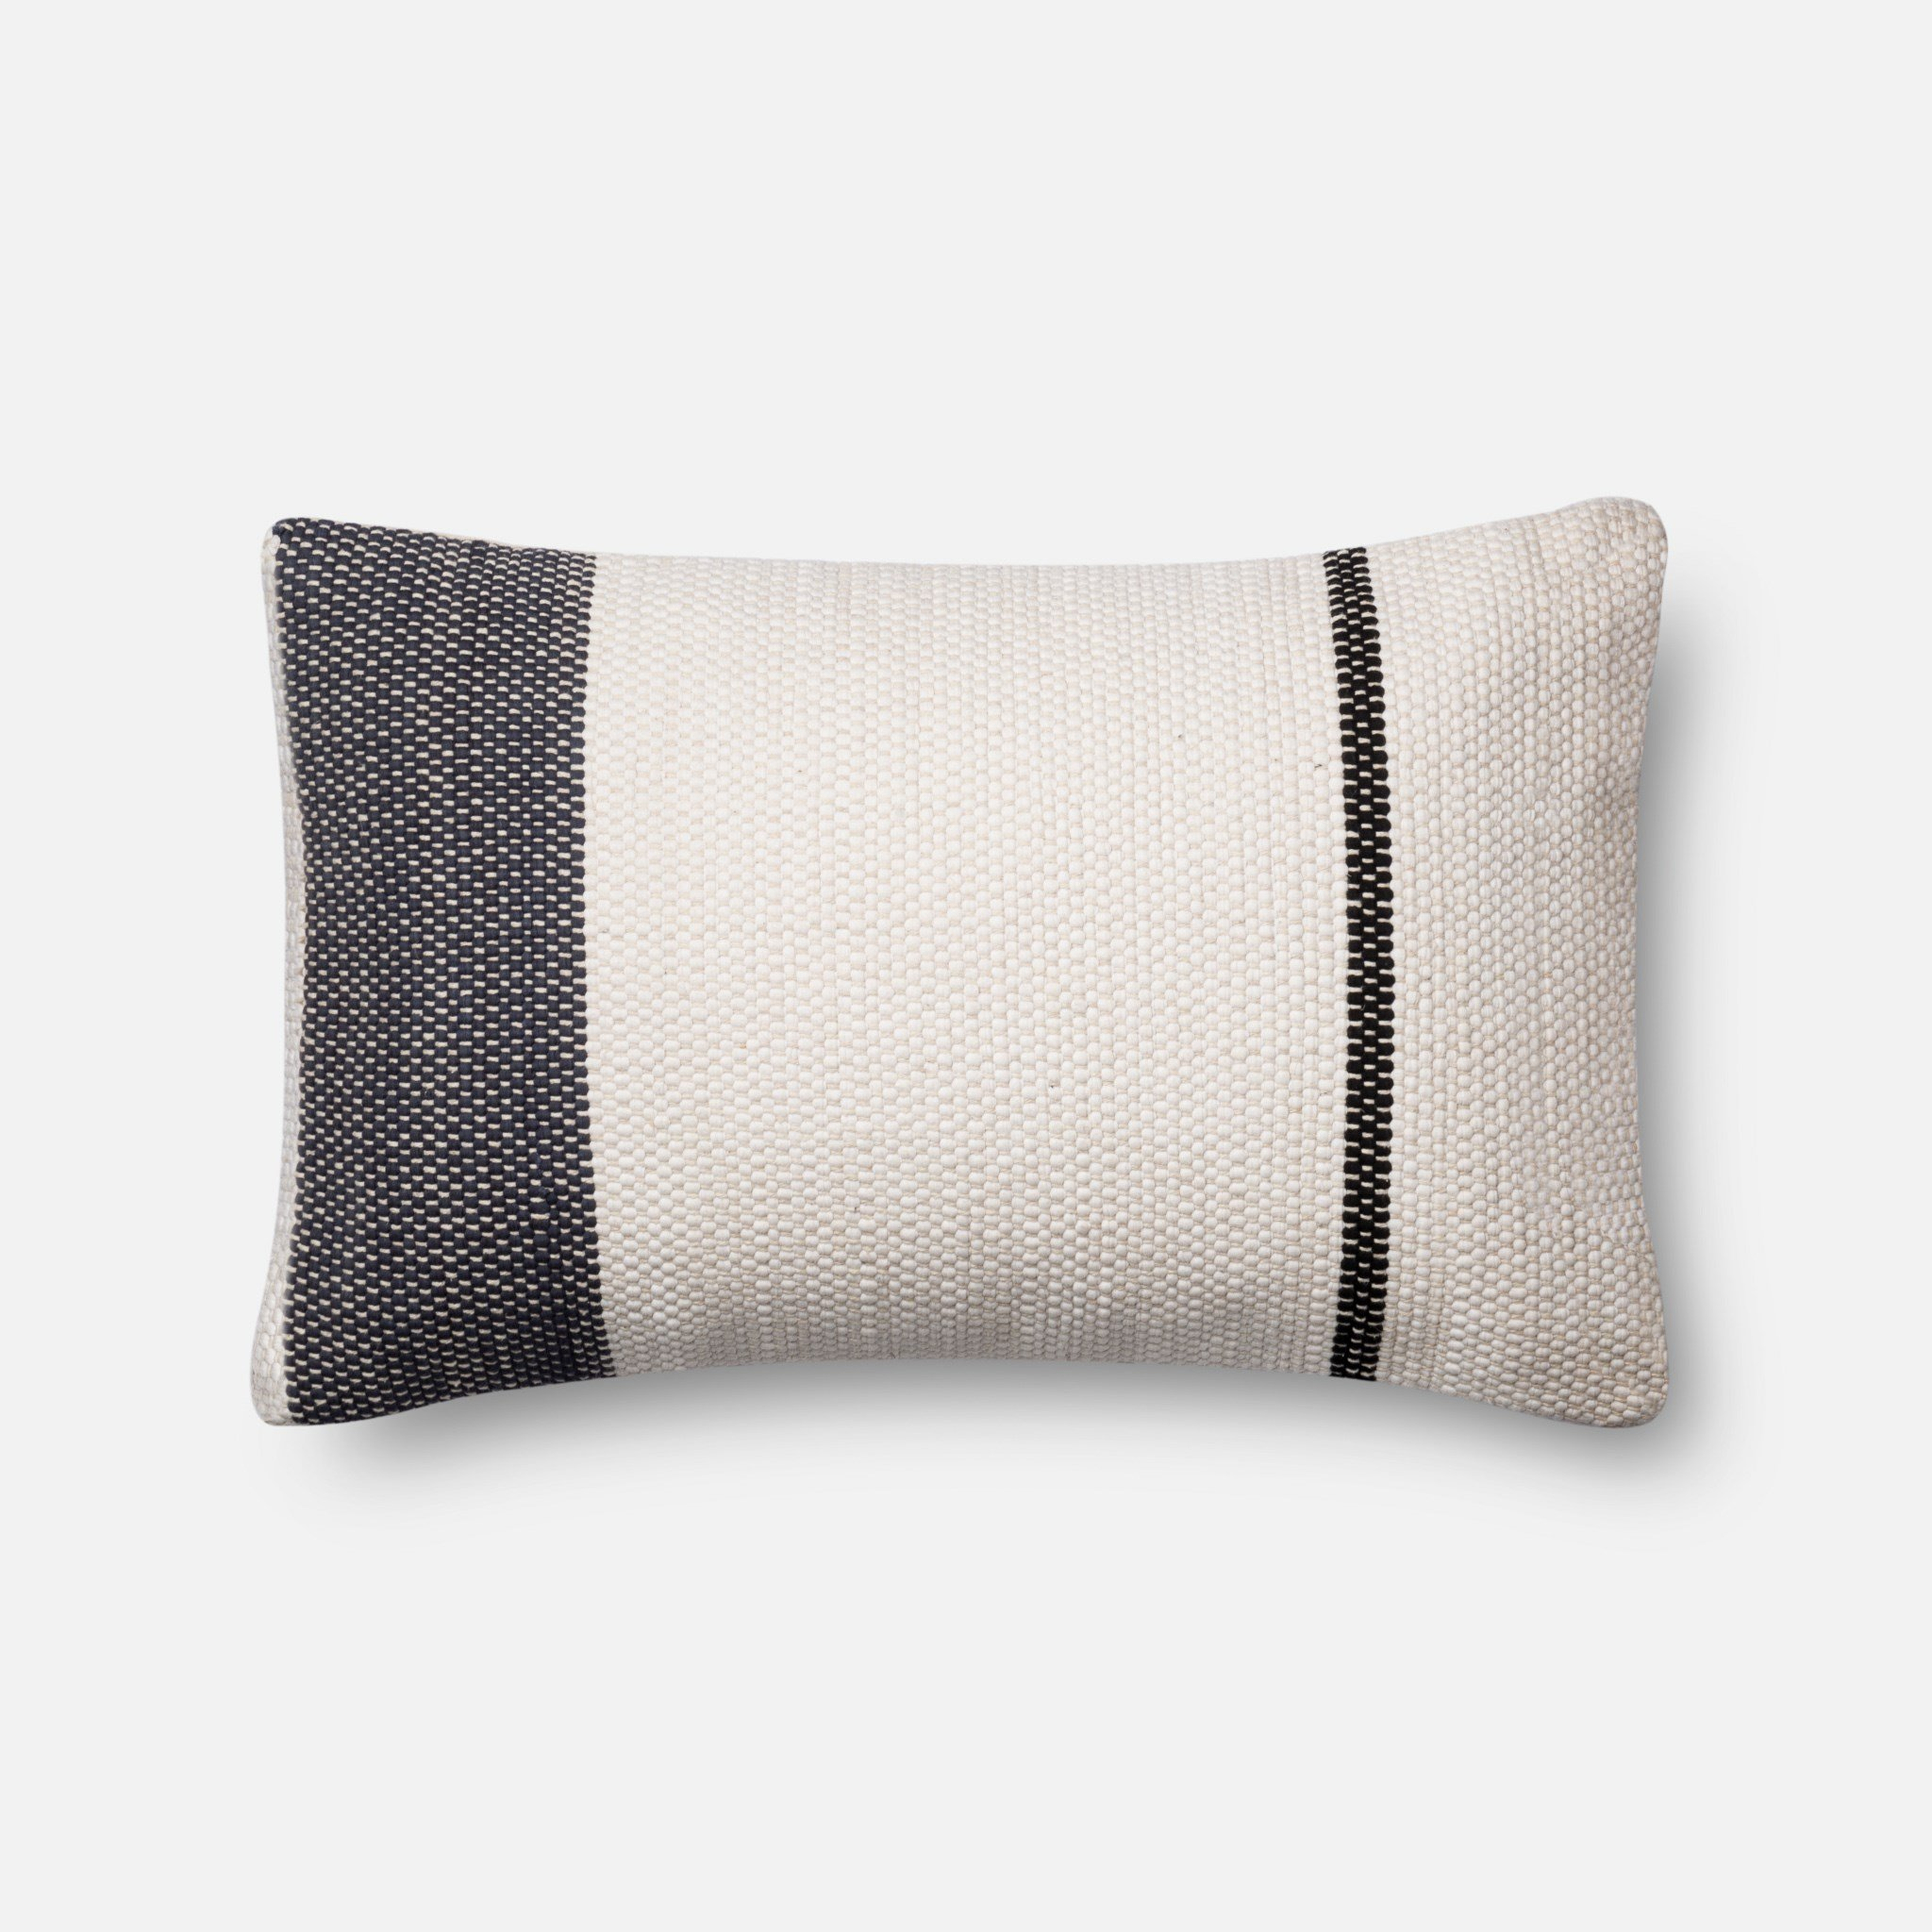 Cotton Lumbar Throw Pillow, Black & White, 21" x 13" cover only - Loma Threads